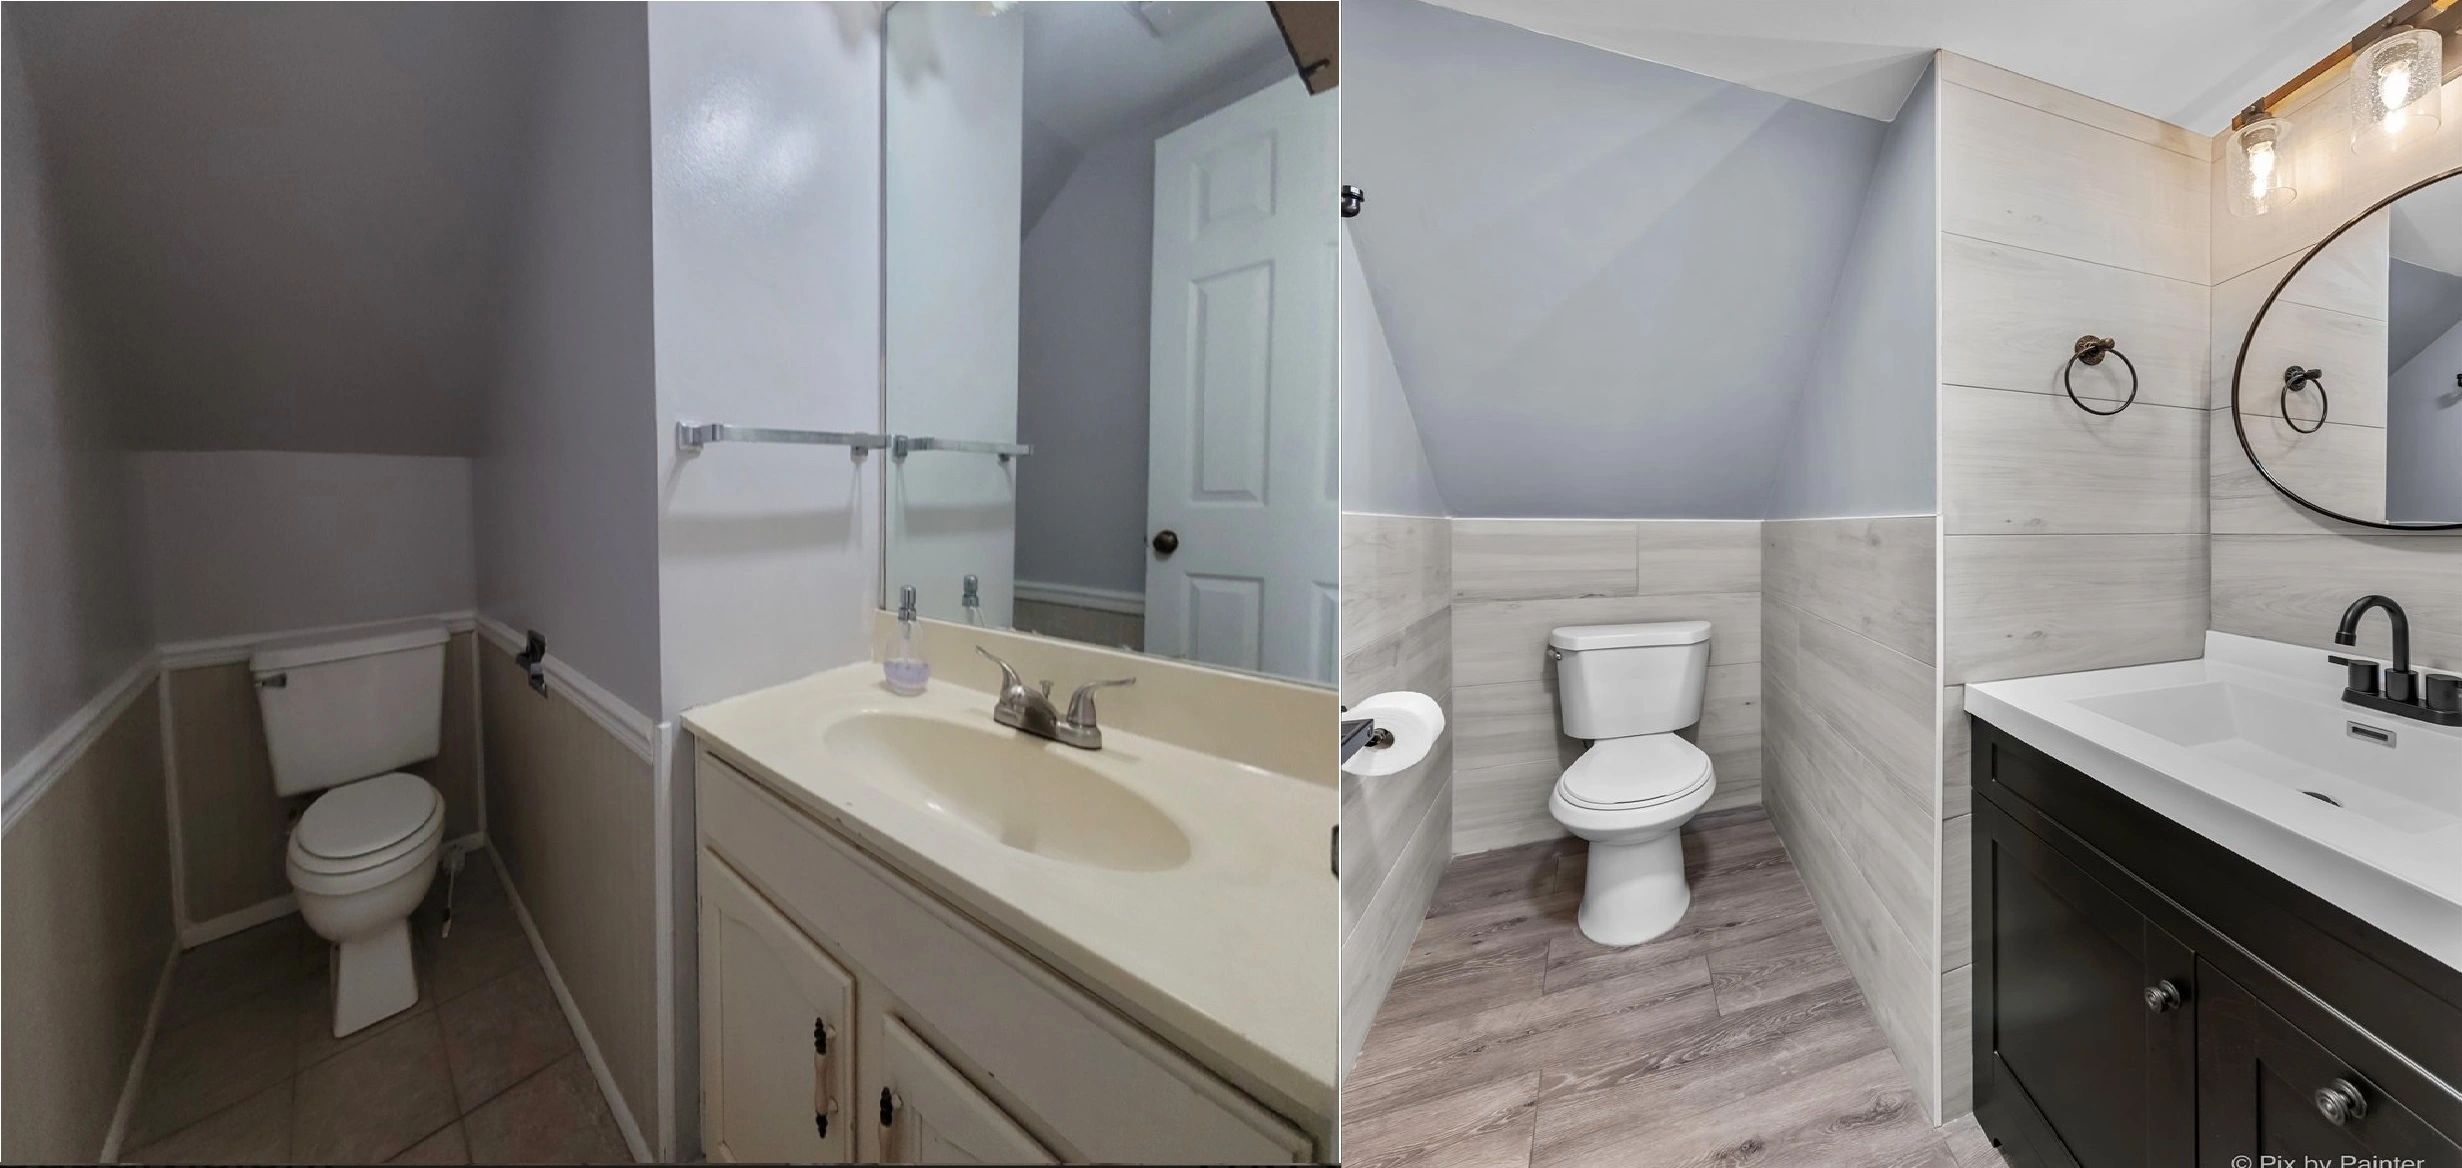 Bathroom remodel, large tile on walls, new floor, black vanity, modern farmhouse, round mirror